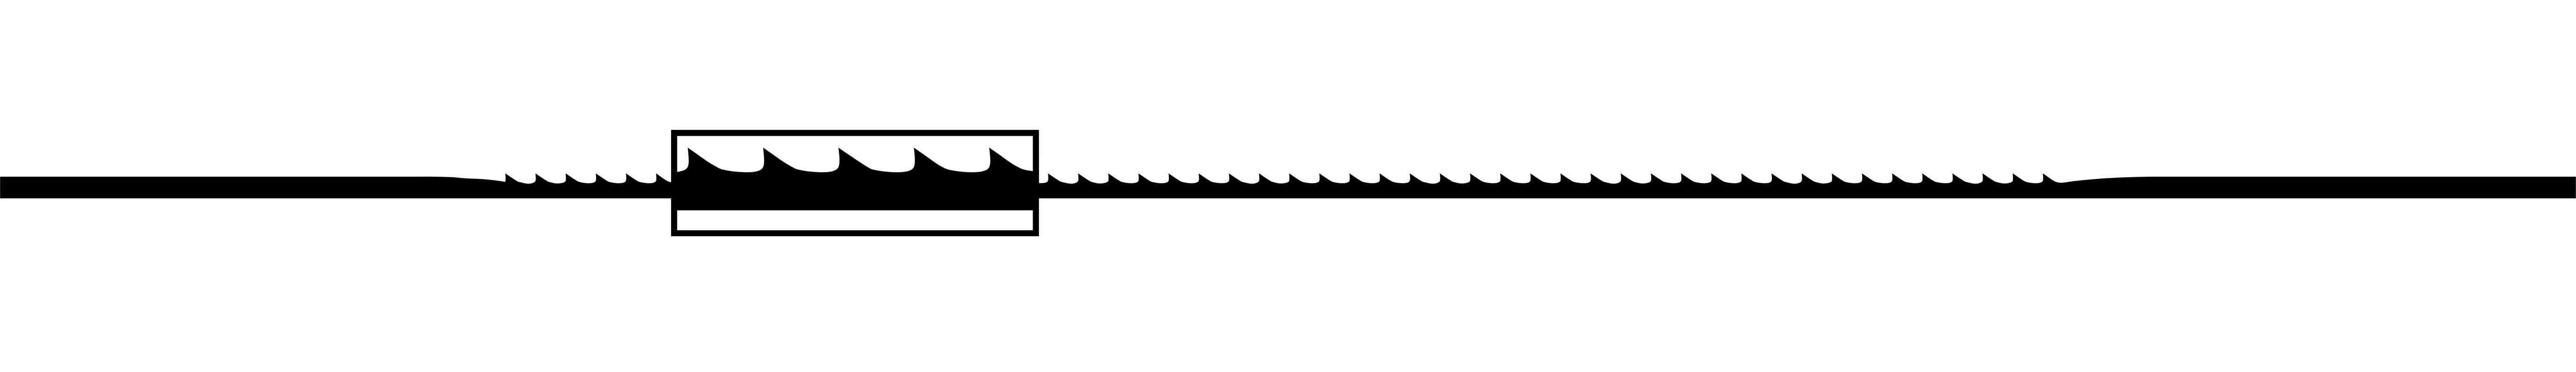 Sägeblätter für Maschinen, normal - 127 mm